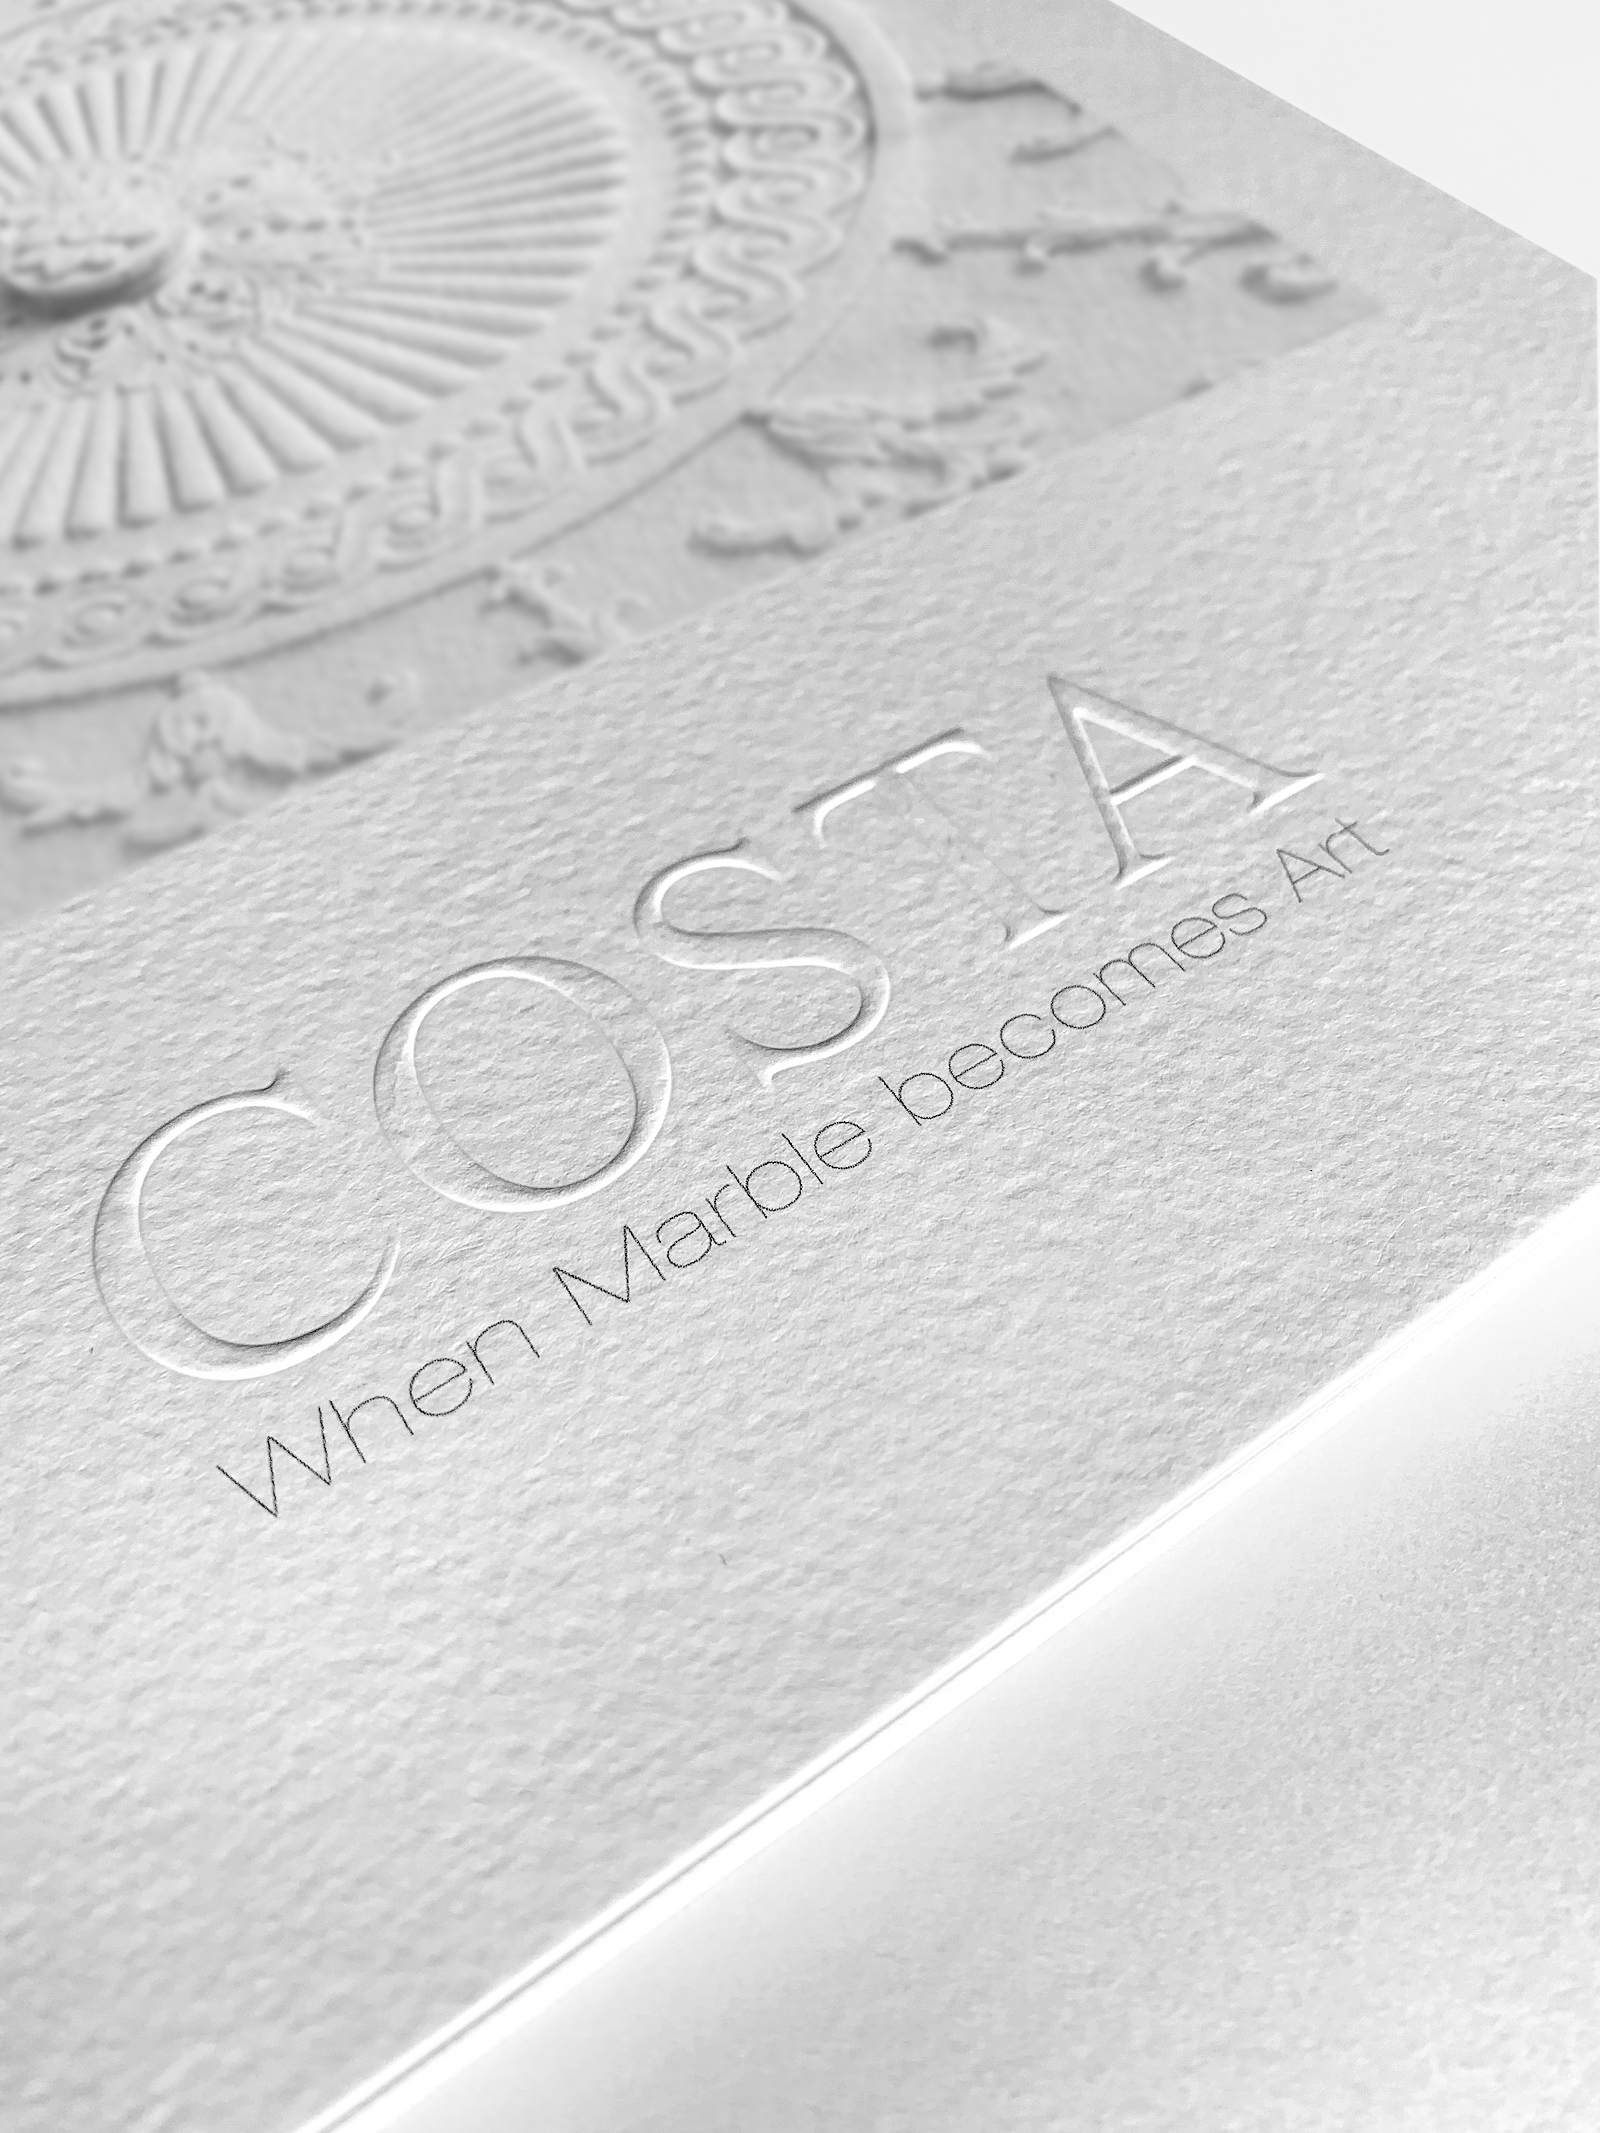 Paolo-Costa-Scultura-Marmi-Carrara-Brochure-2019-001